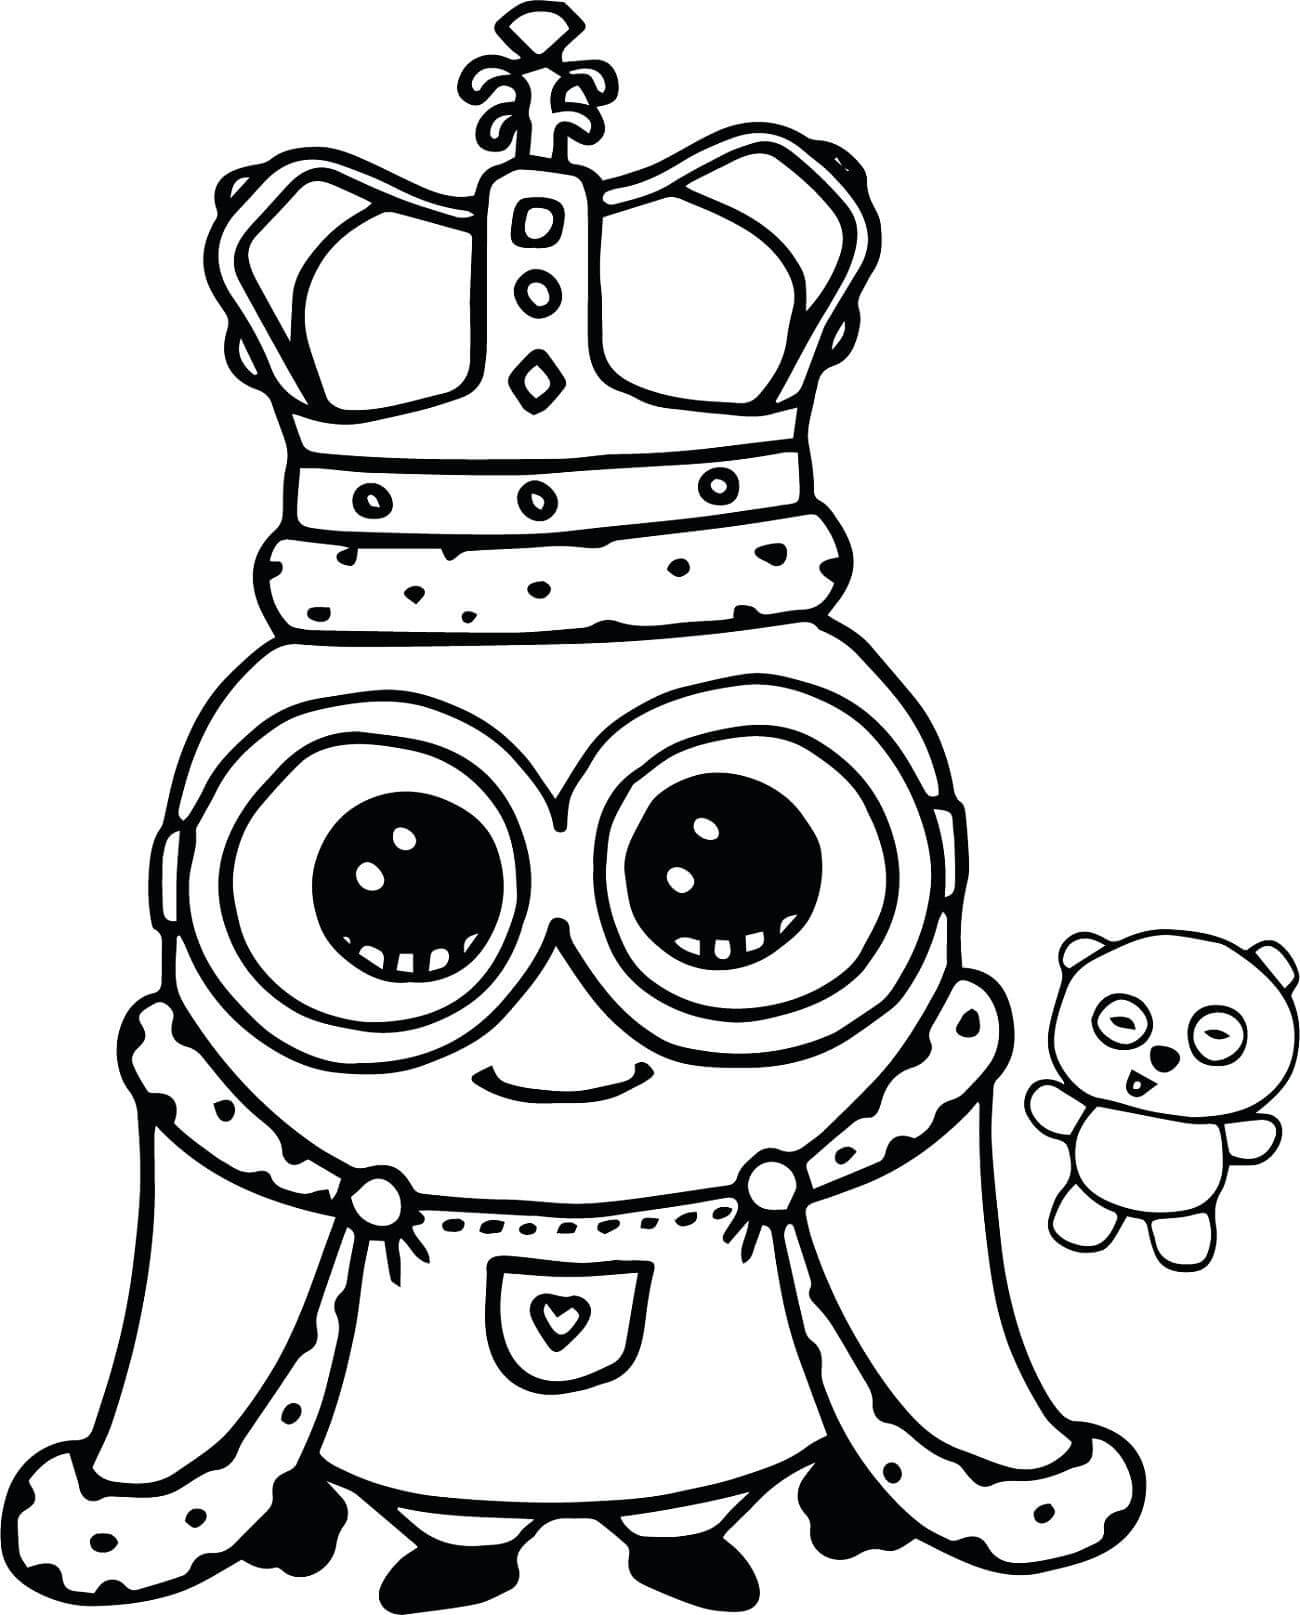 Dibujos de Reina Minion y Oso de Peluche para colorear